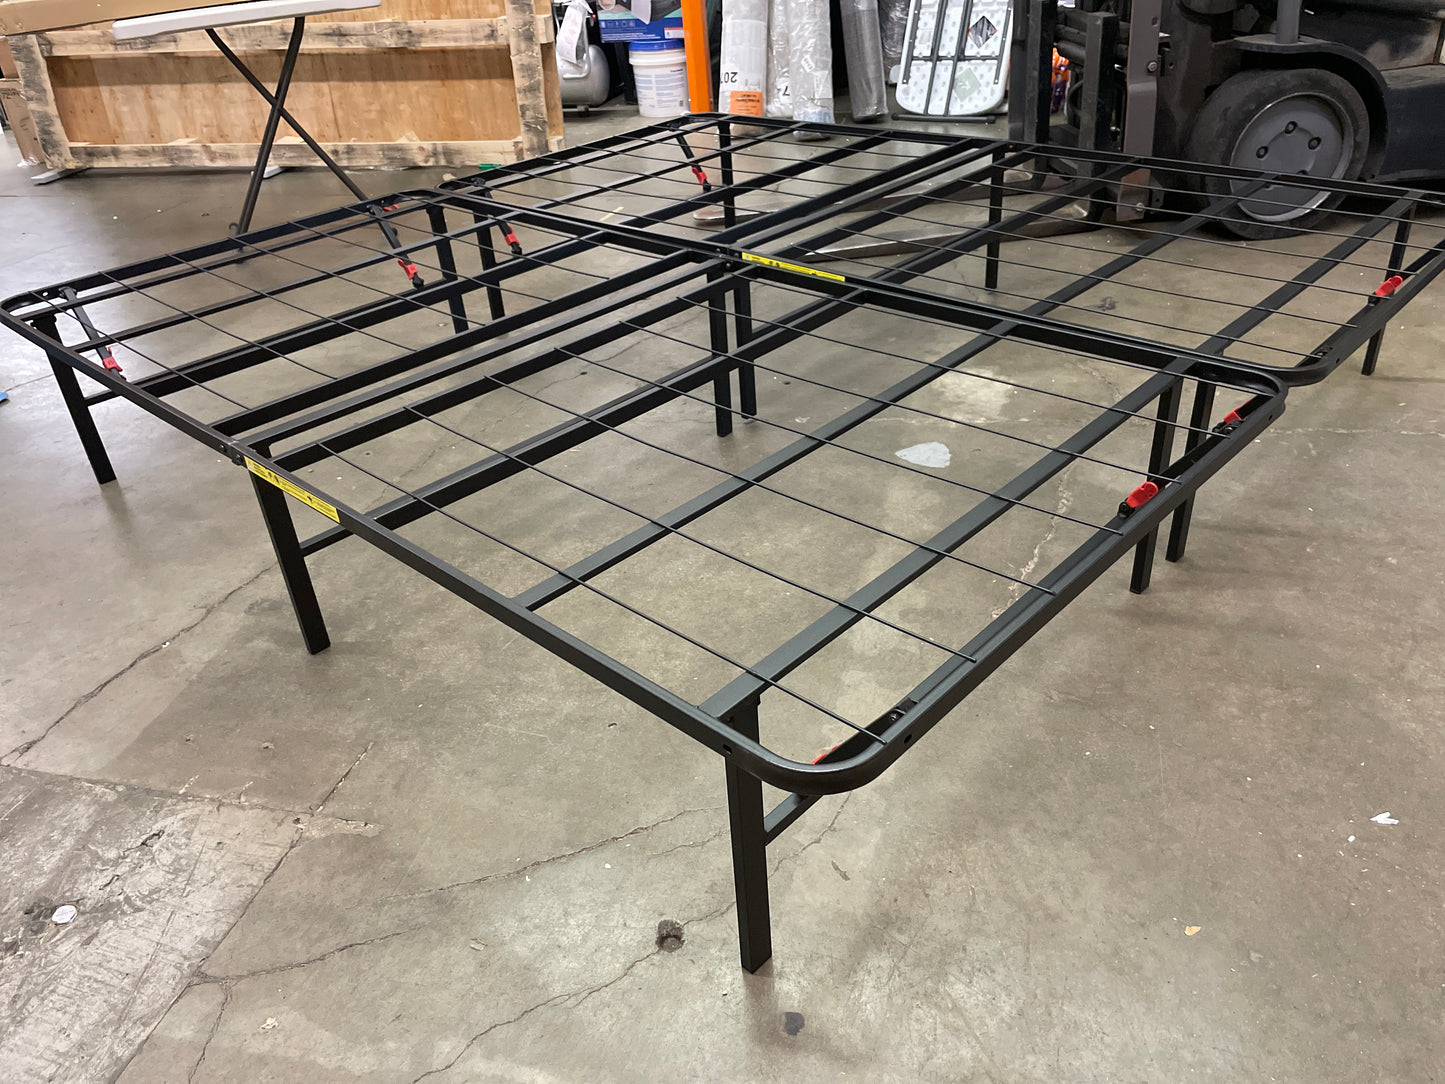 Like NEW - Amazon Basics KING Foldable Metal Platform Bed Frame, 14 Inches High - Retail $132